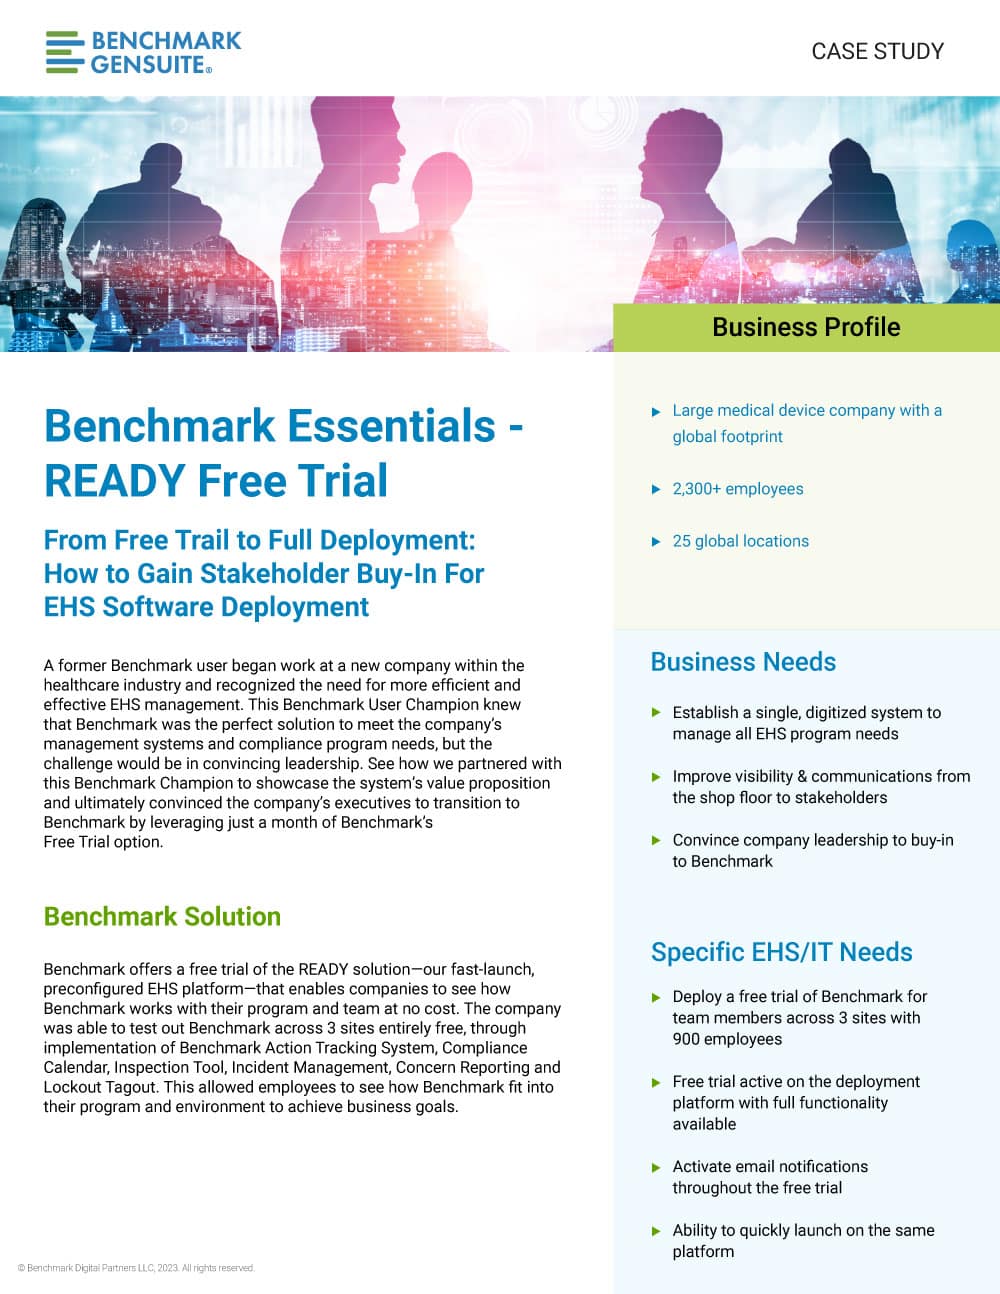 Benchmark Essentials READY Free Trial